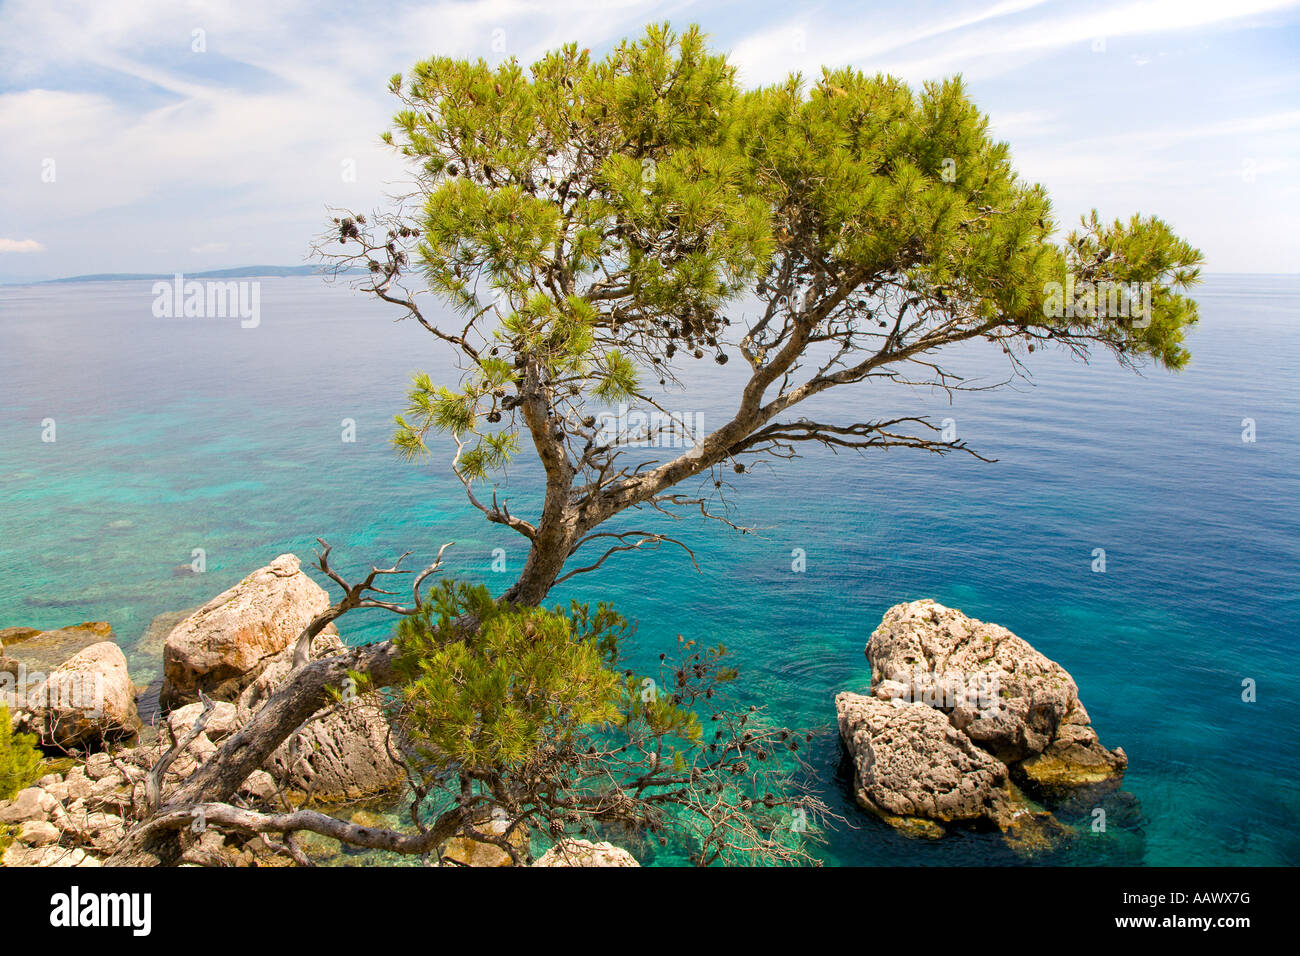 Aleppo pine (Pinus halepensis), in front of turquoise-blue sea, Island Hvar, Dalmatia, Croatia Stock Photo